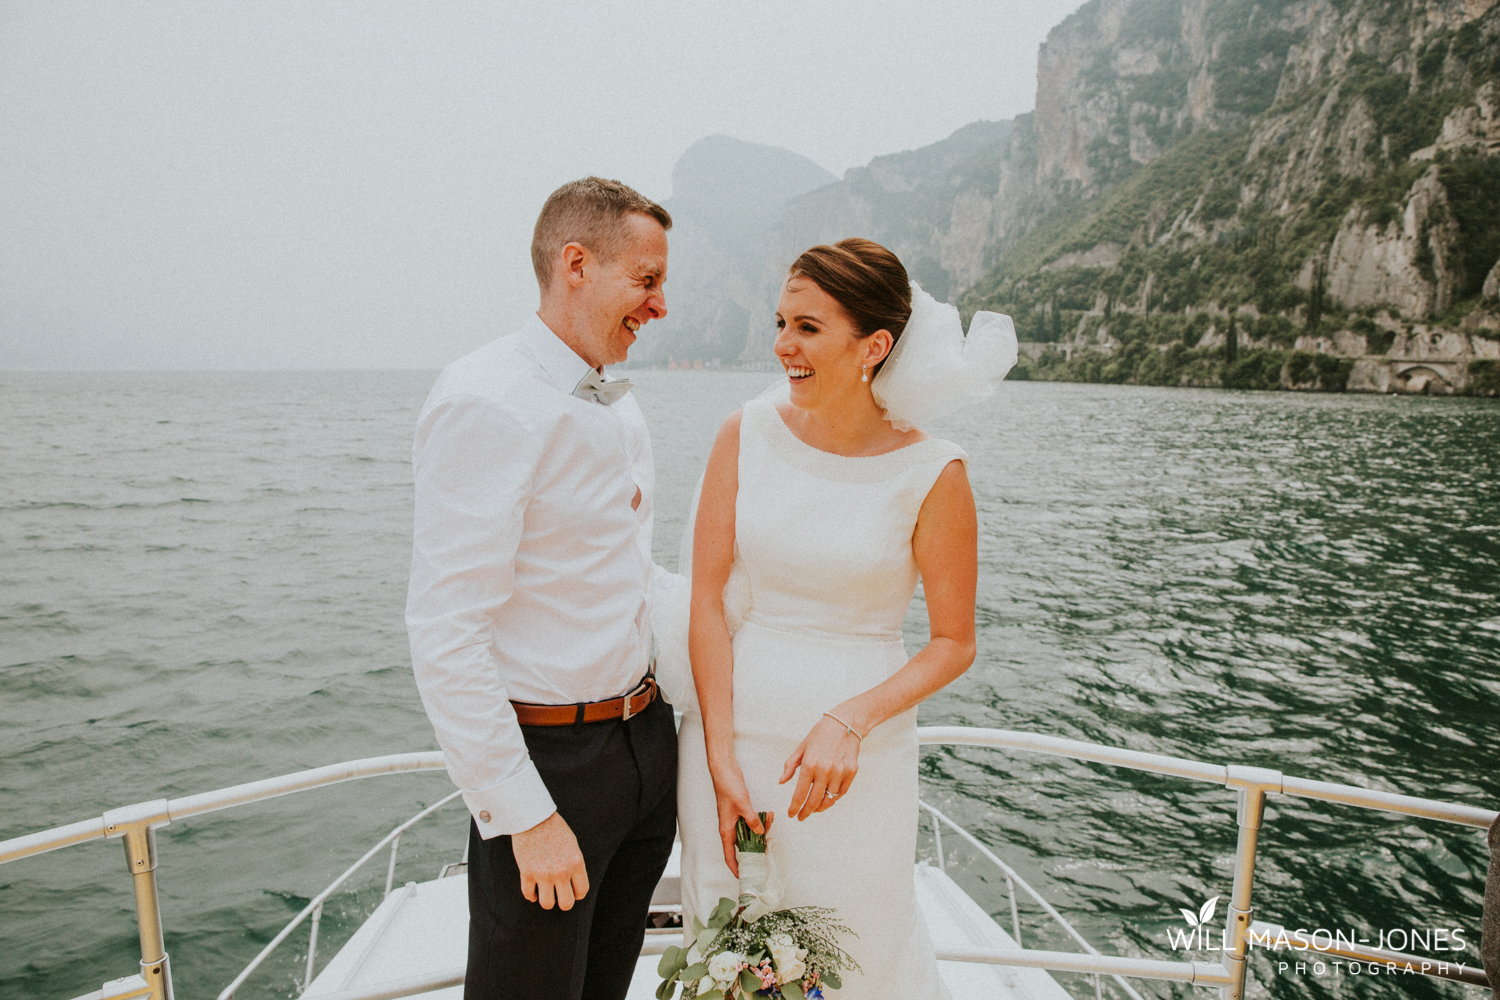  lake garda weddings boat trip after malcesine wedding 